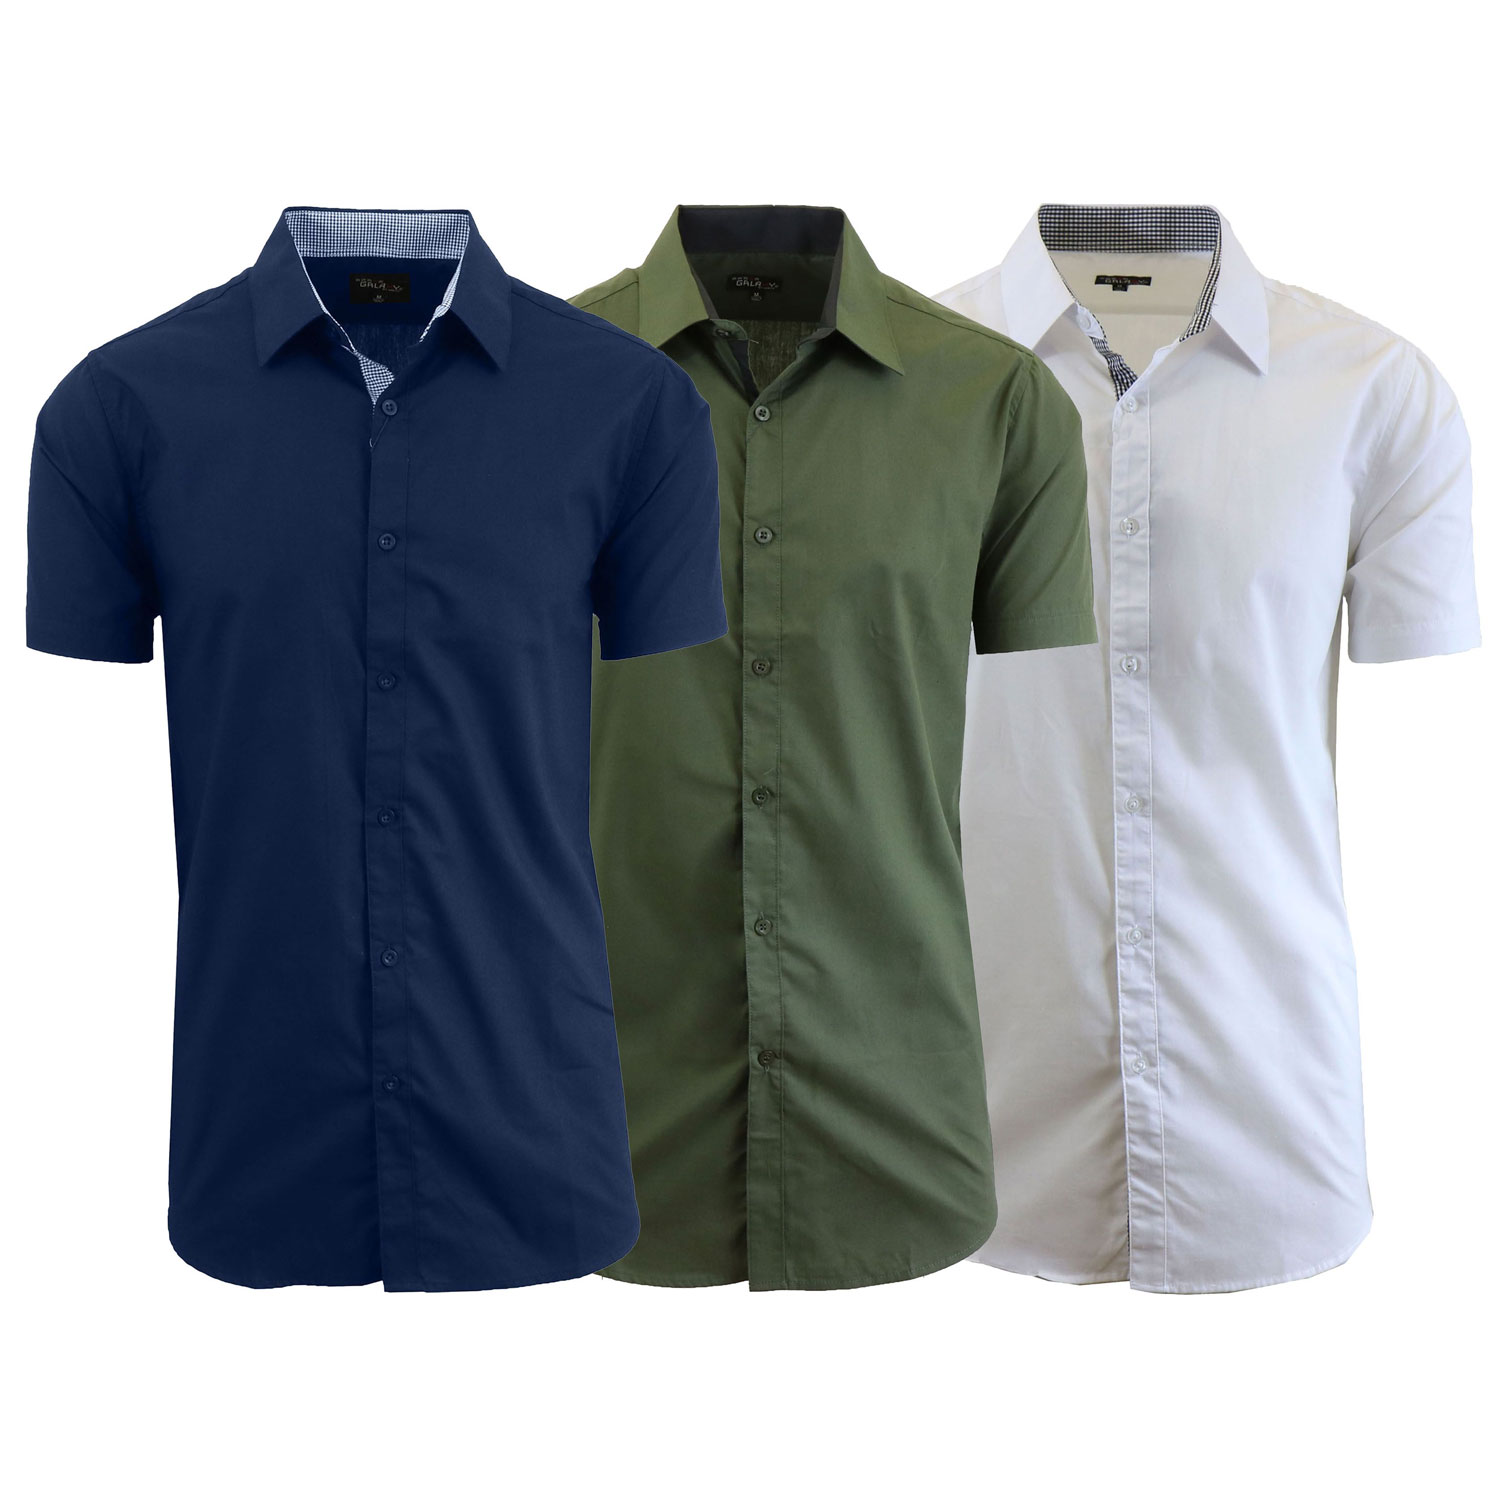 3 Pack Men's Slim Fit Short Sleeve Dress Shirts